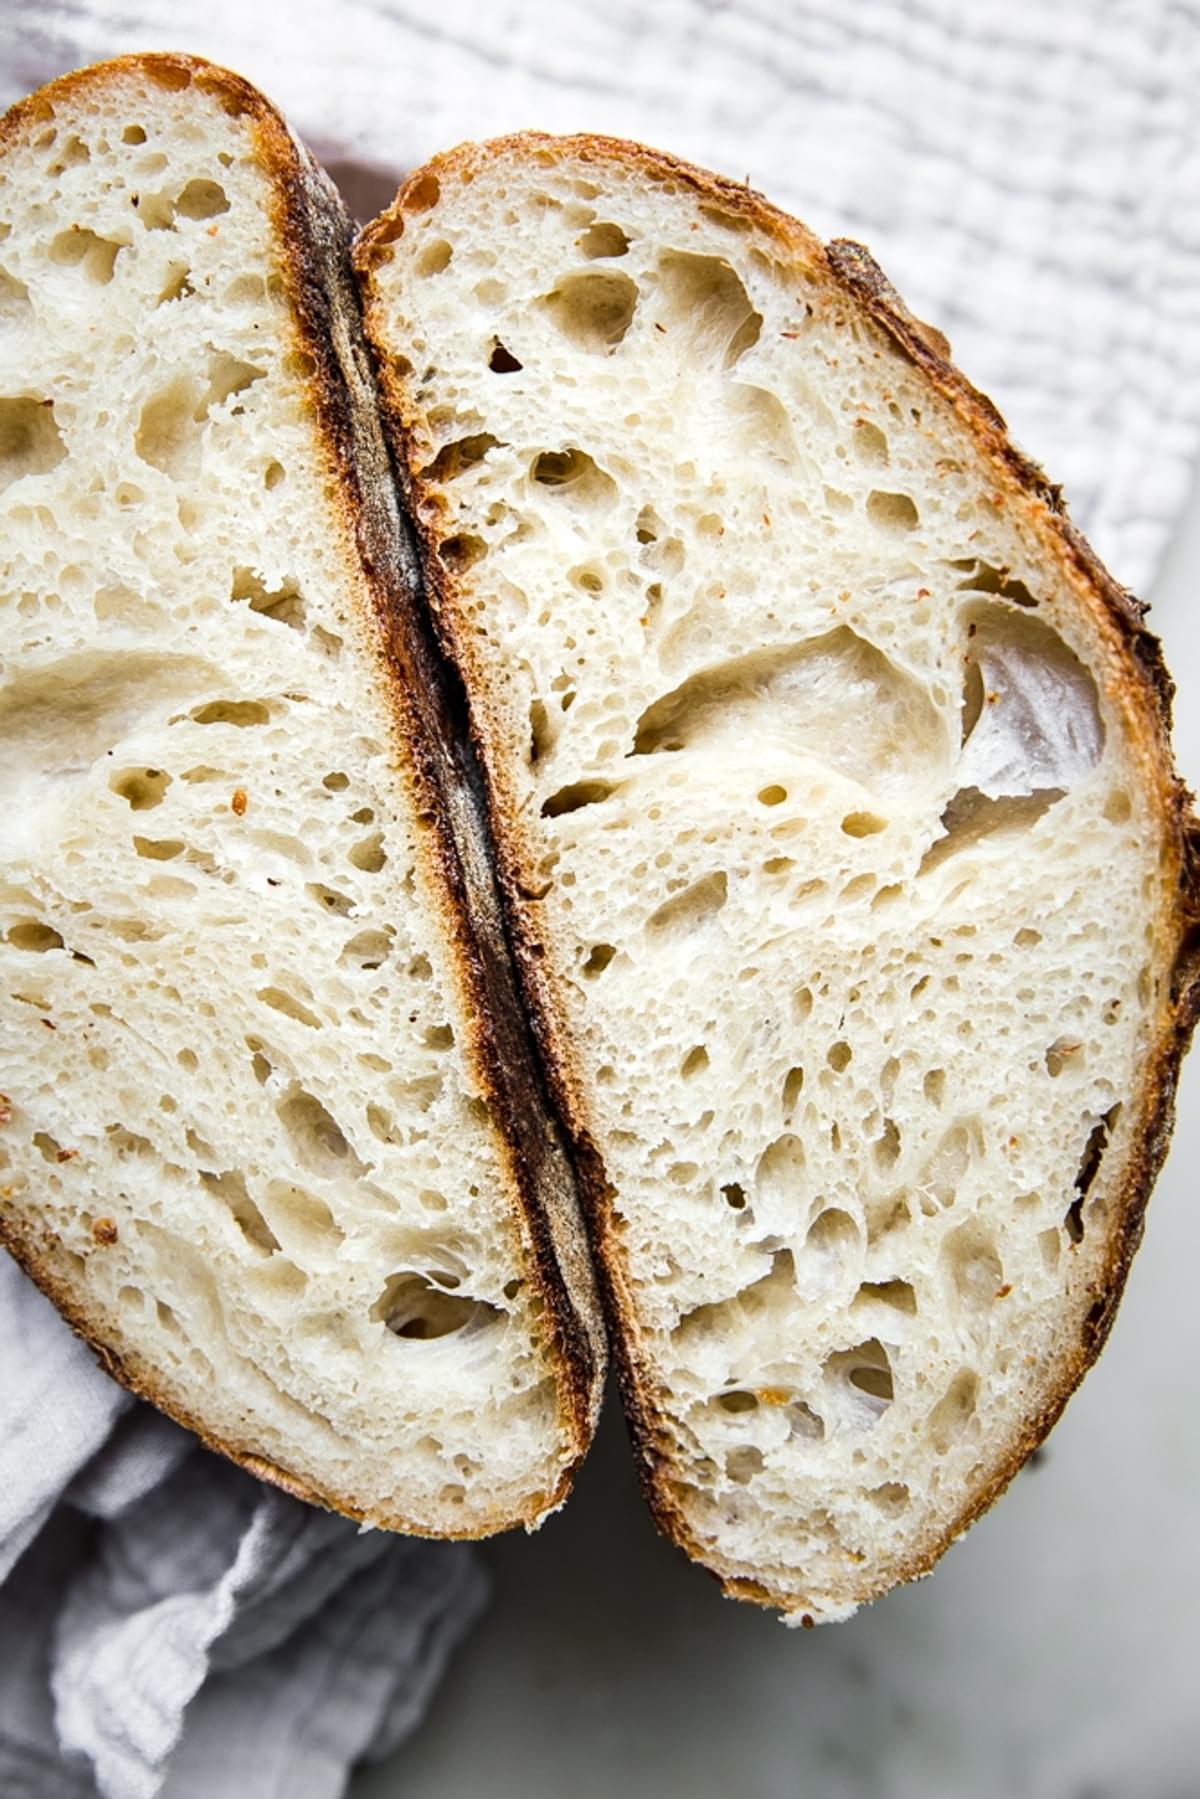 sourdough bread cut in half showing crumb